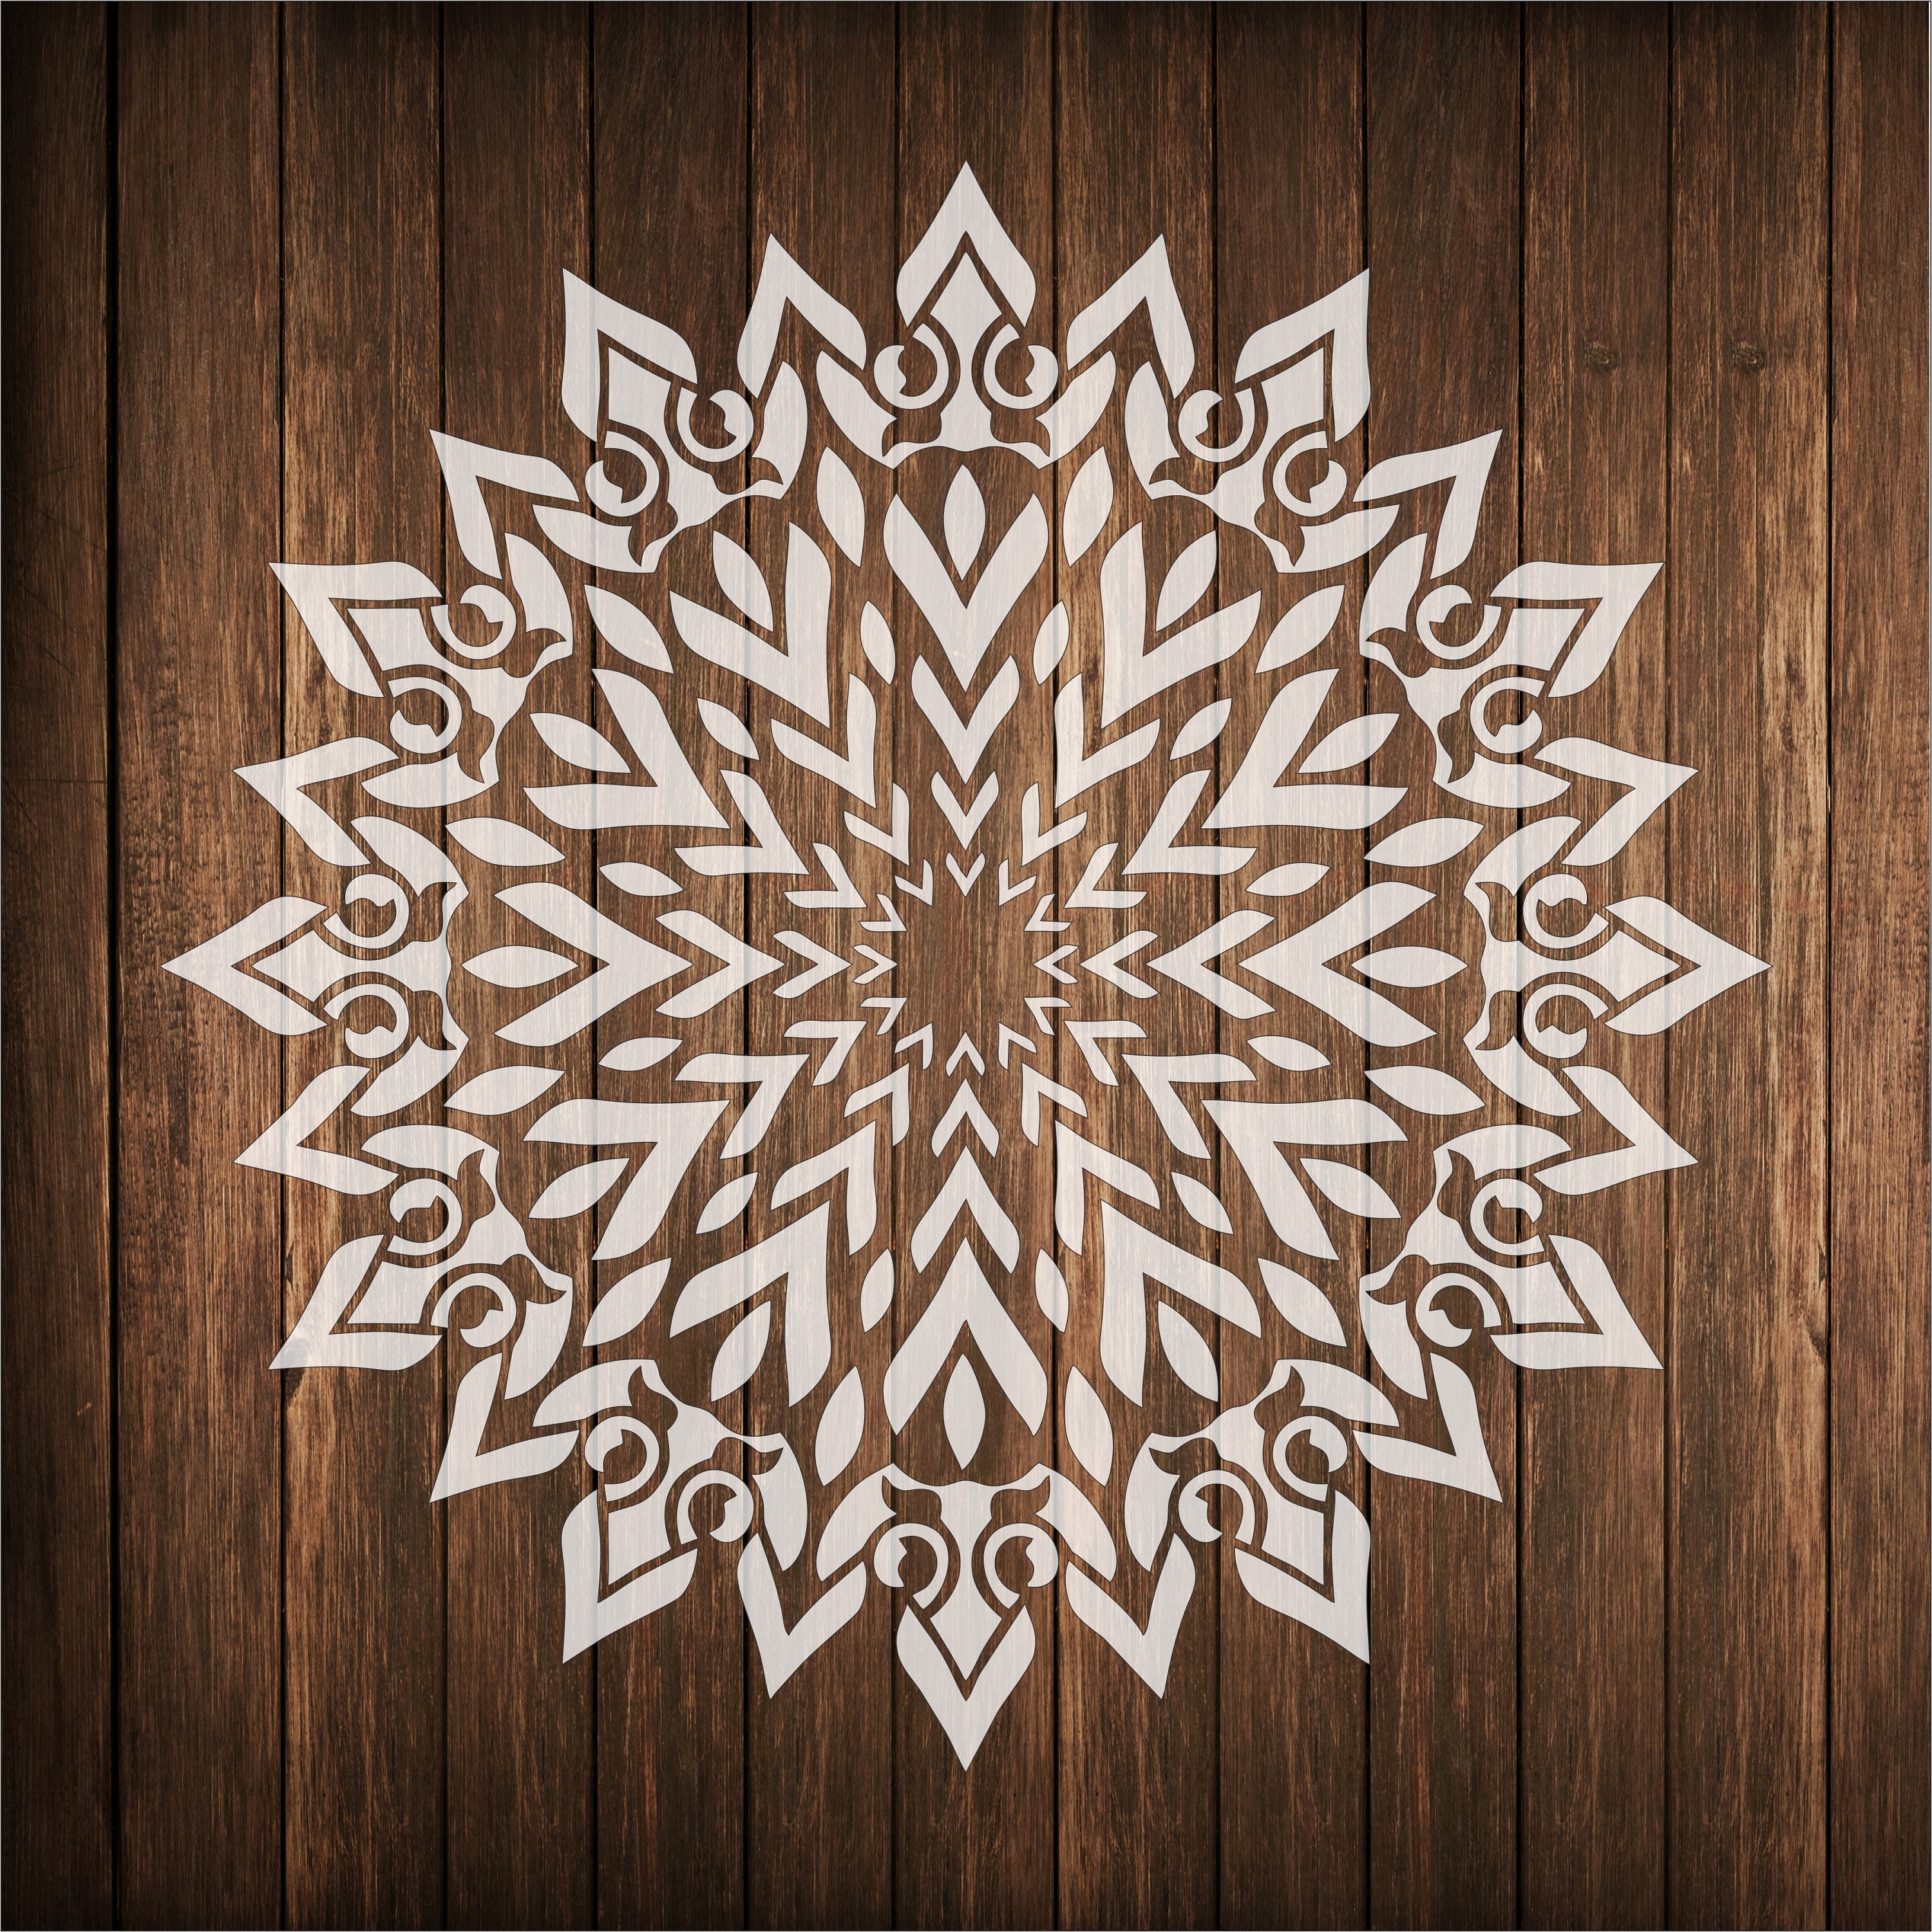 6 Mandala Stencils for Canvas - Various Designs